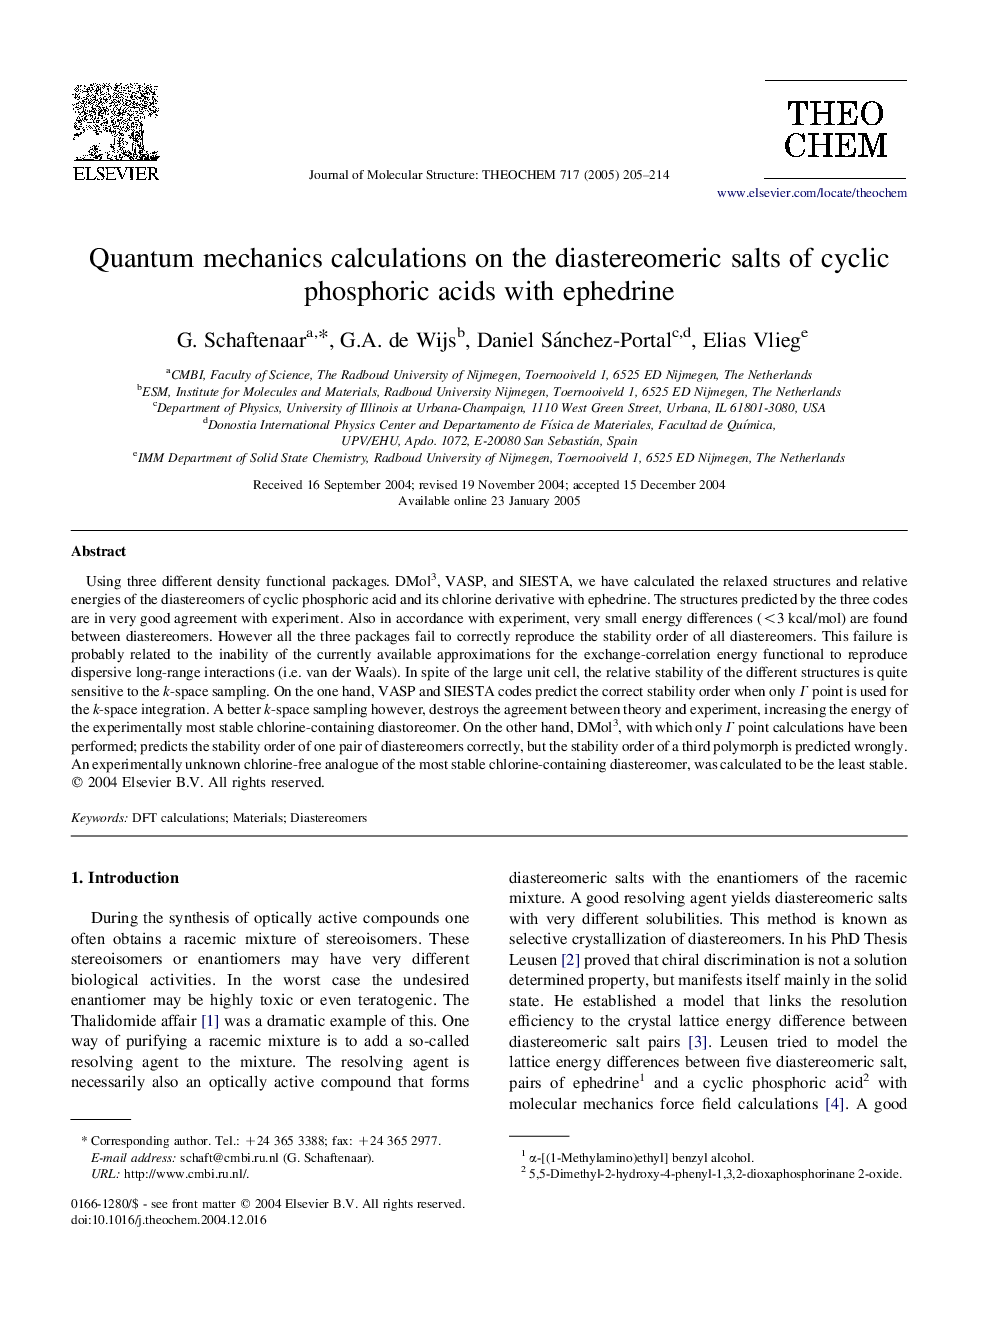 Quantum mechanics calculations on the diastereomeric salts of cyclic phosphoric acids with ephedrine